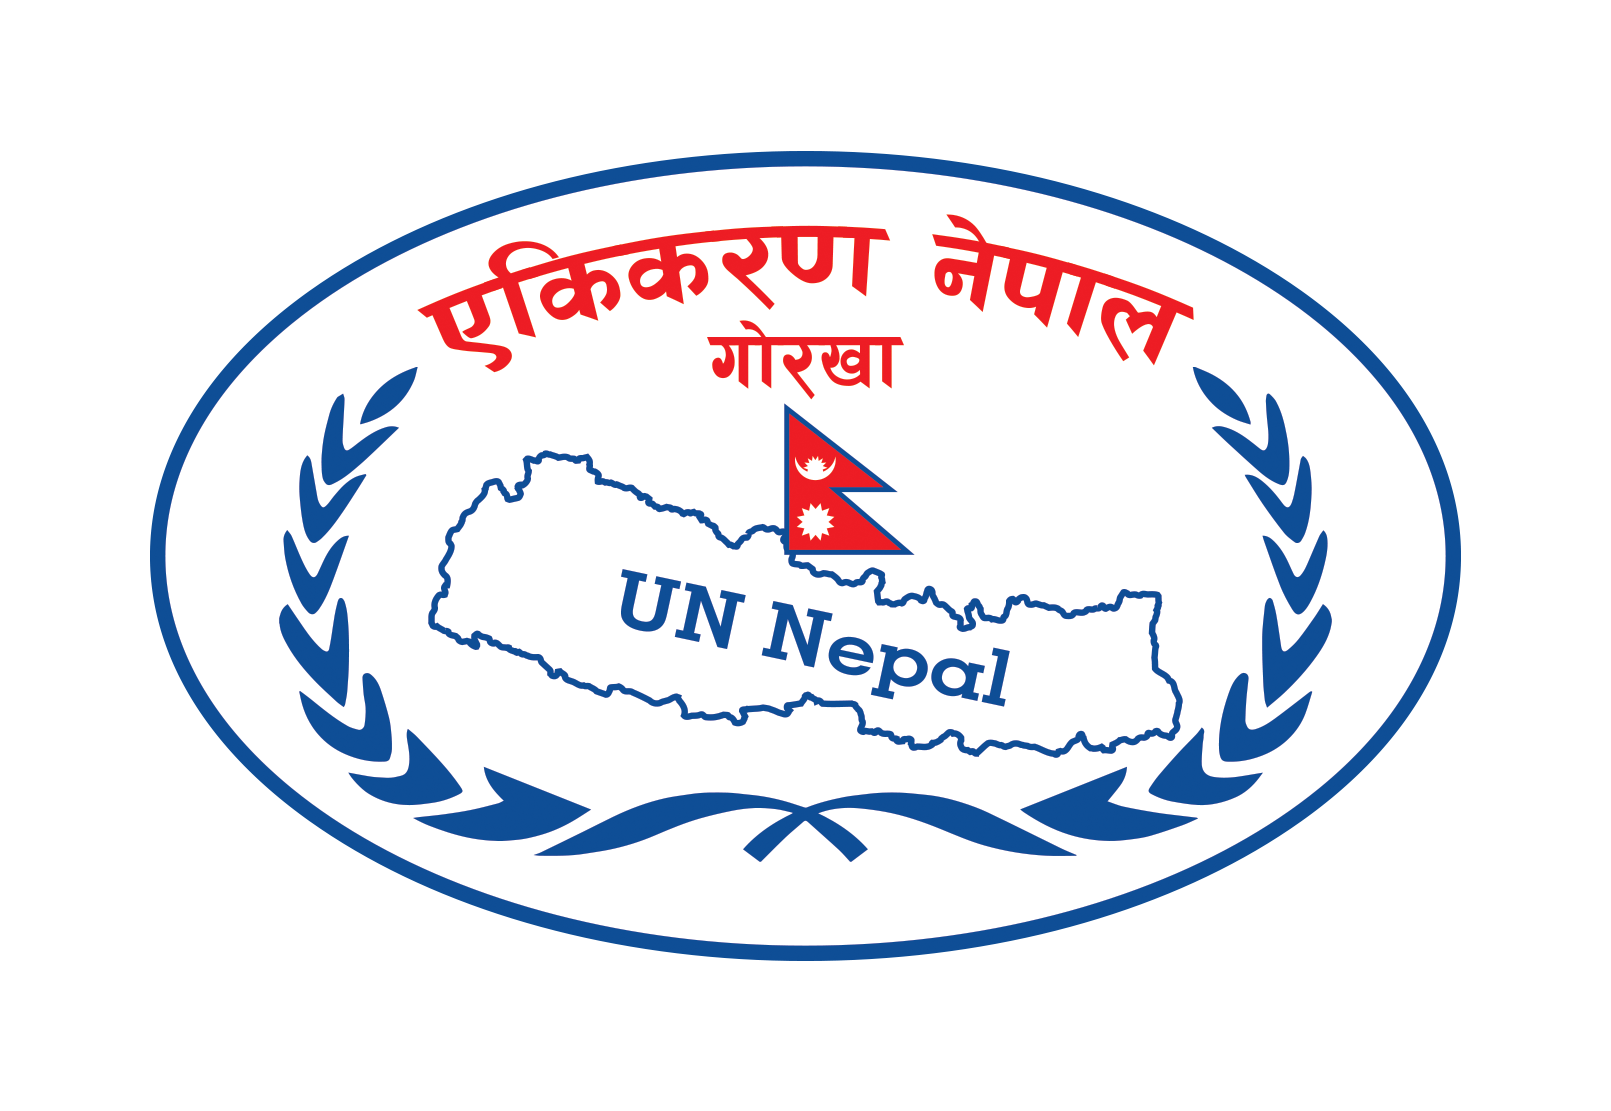 UN Nepal